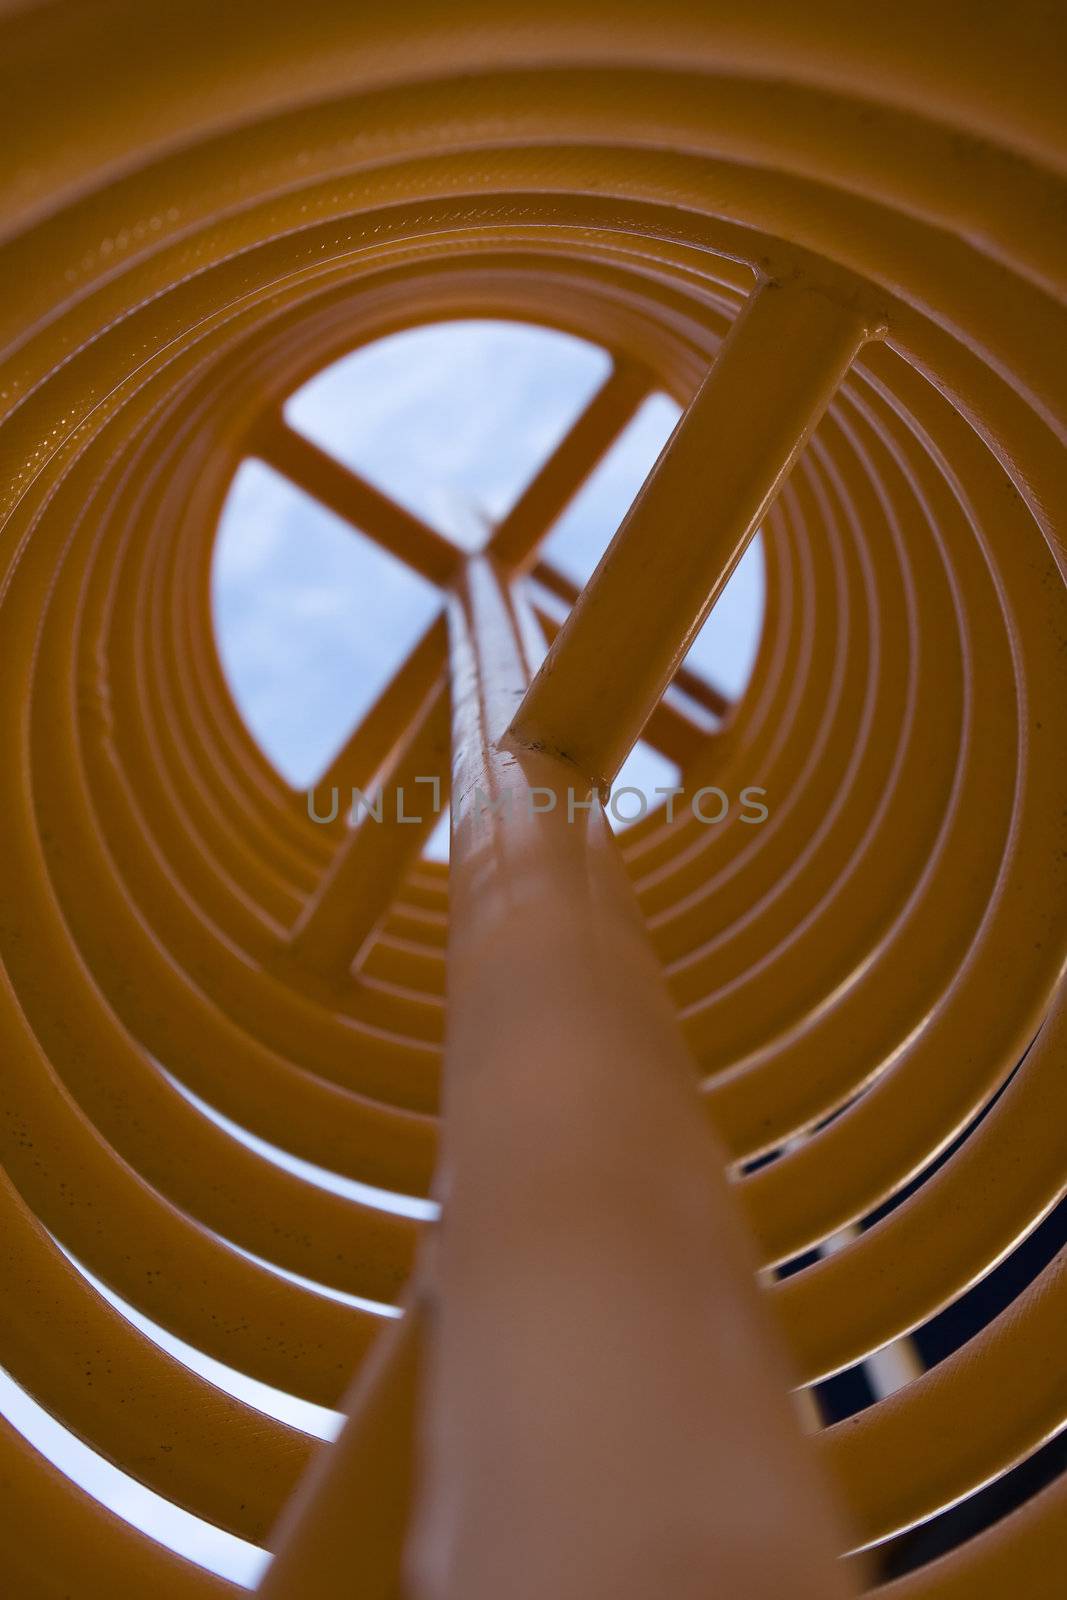 Spiral climbing equipment at a child's playground.